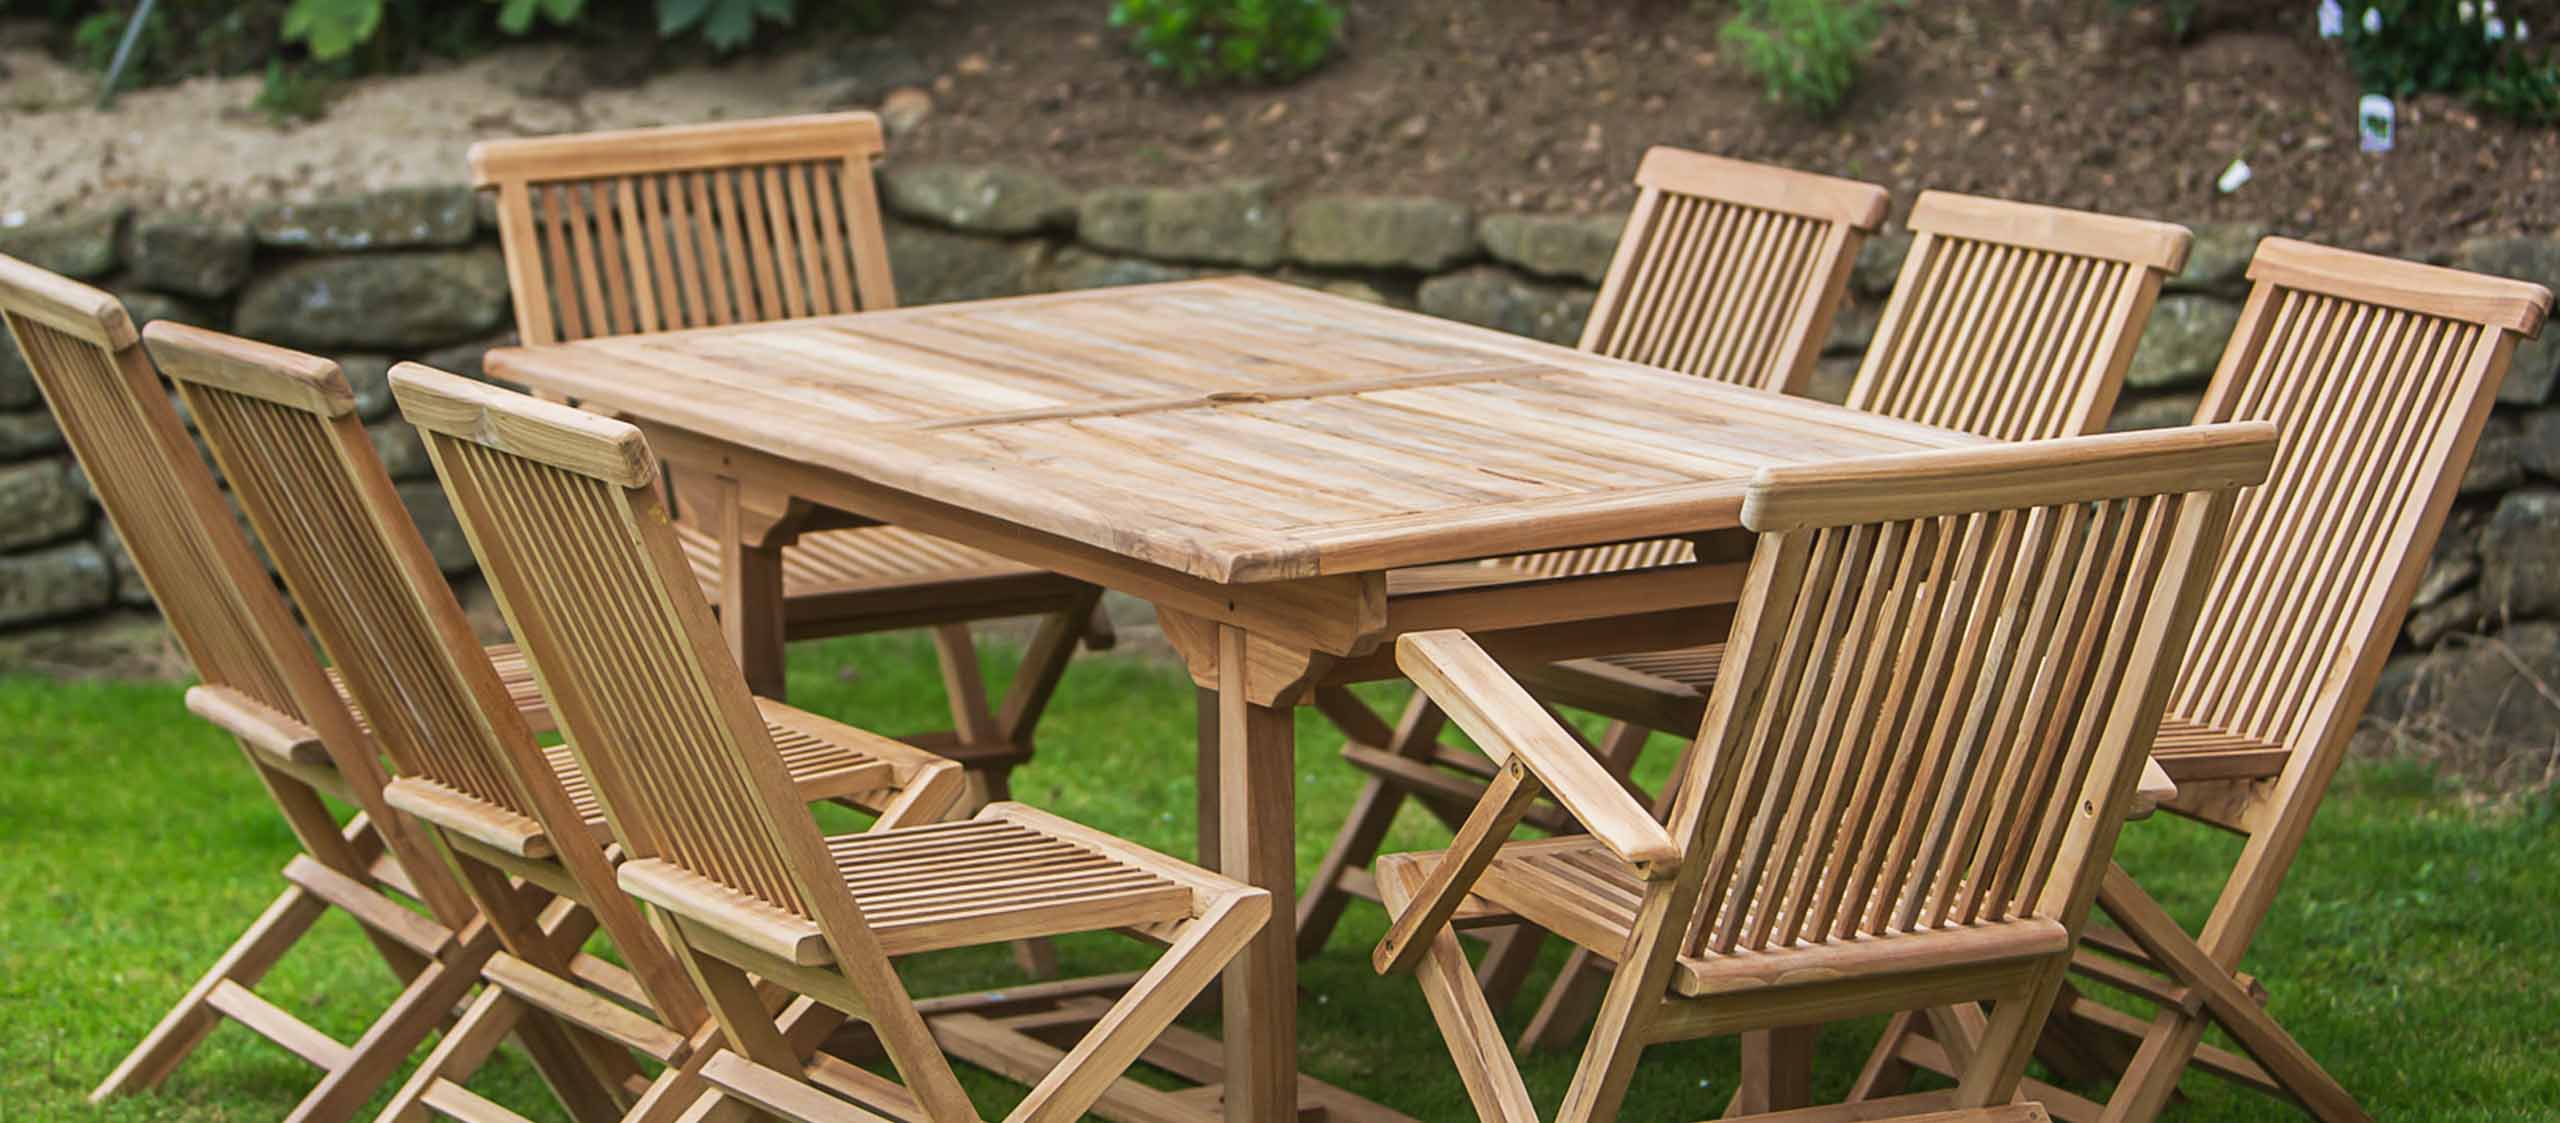 Top Teak Outdoor Furniture Designs For Your Patio